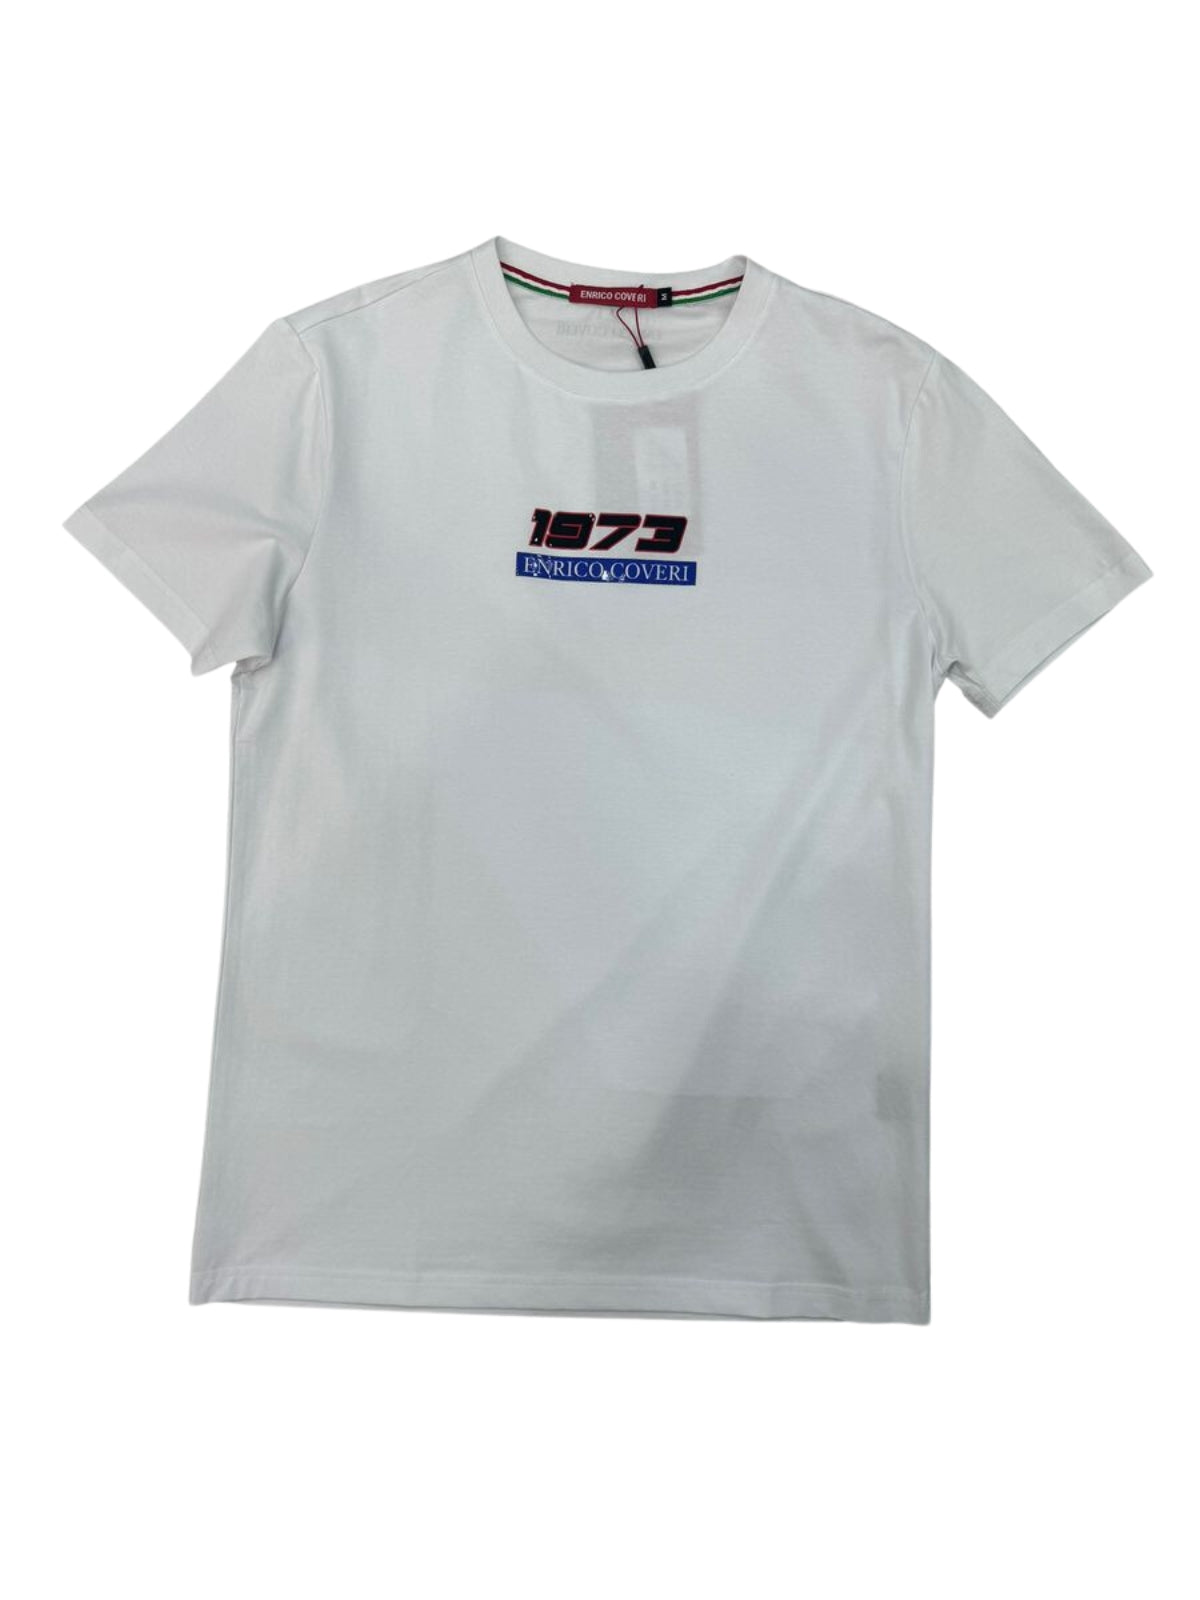 Enrico T-Shirt Center Logo White